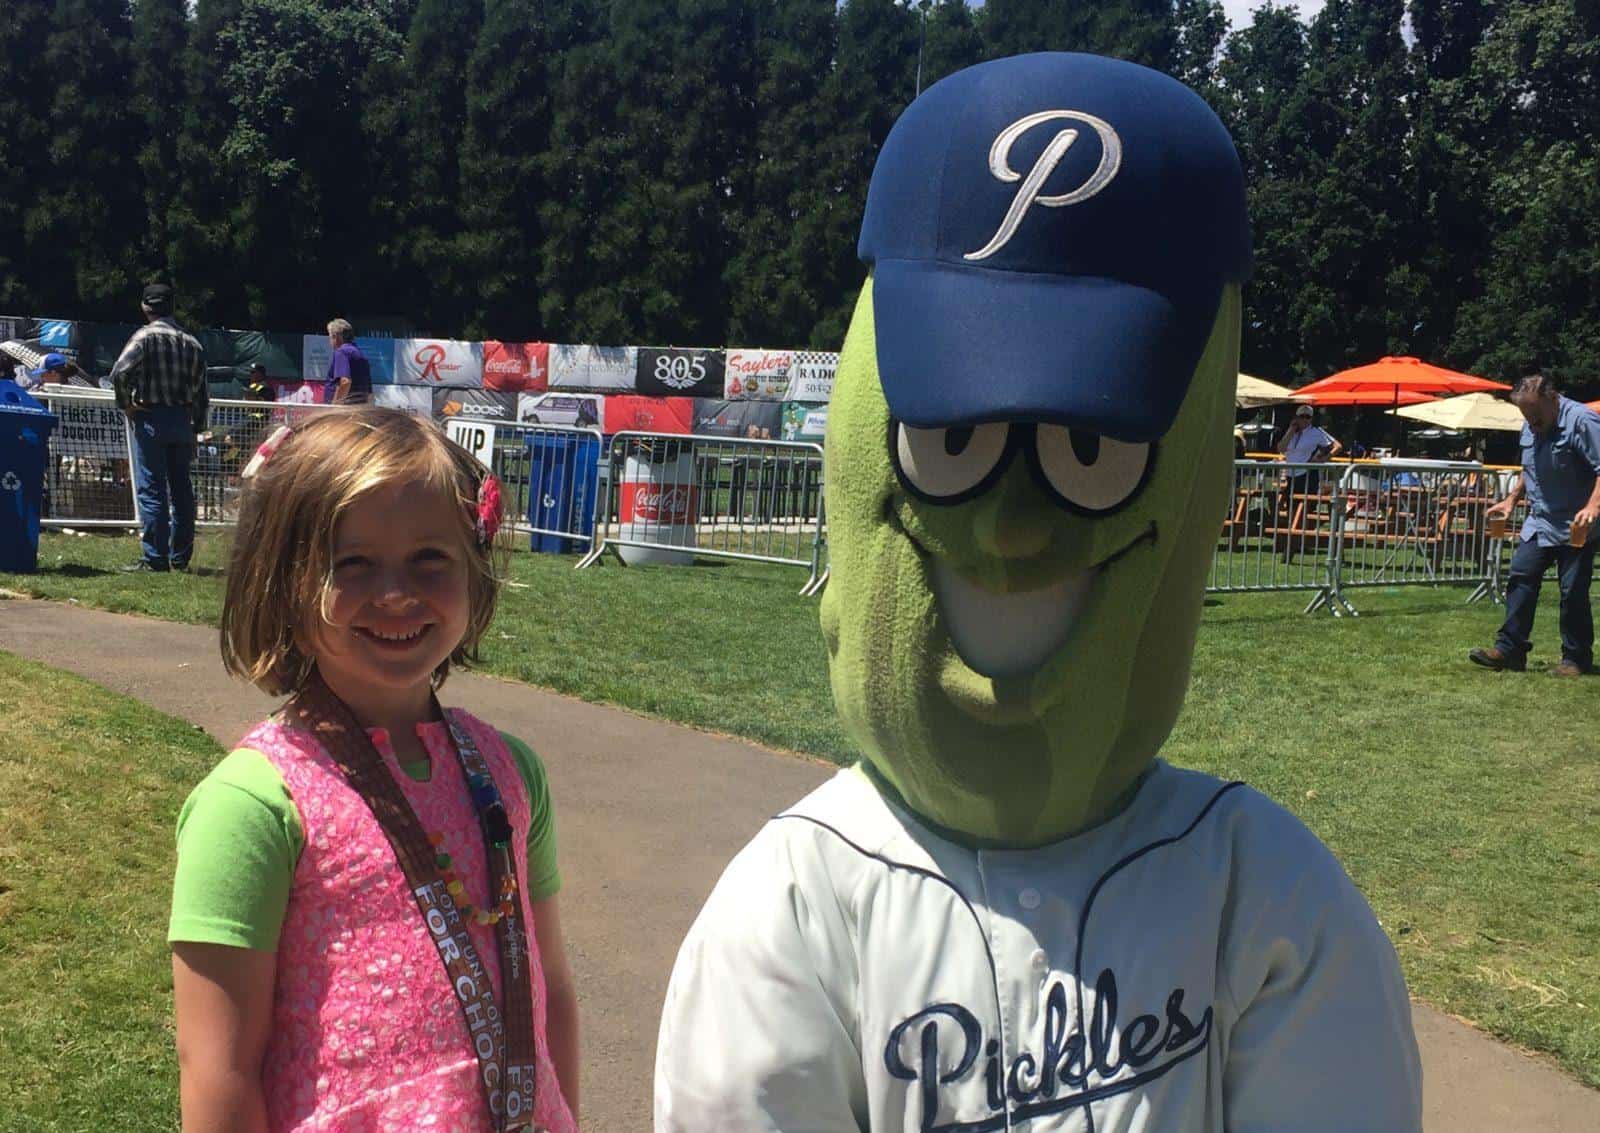 Catch a Portland Pickles or Hillsboro Hops baseball game.